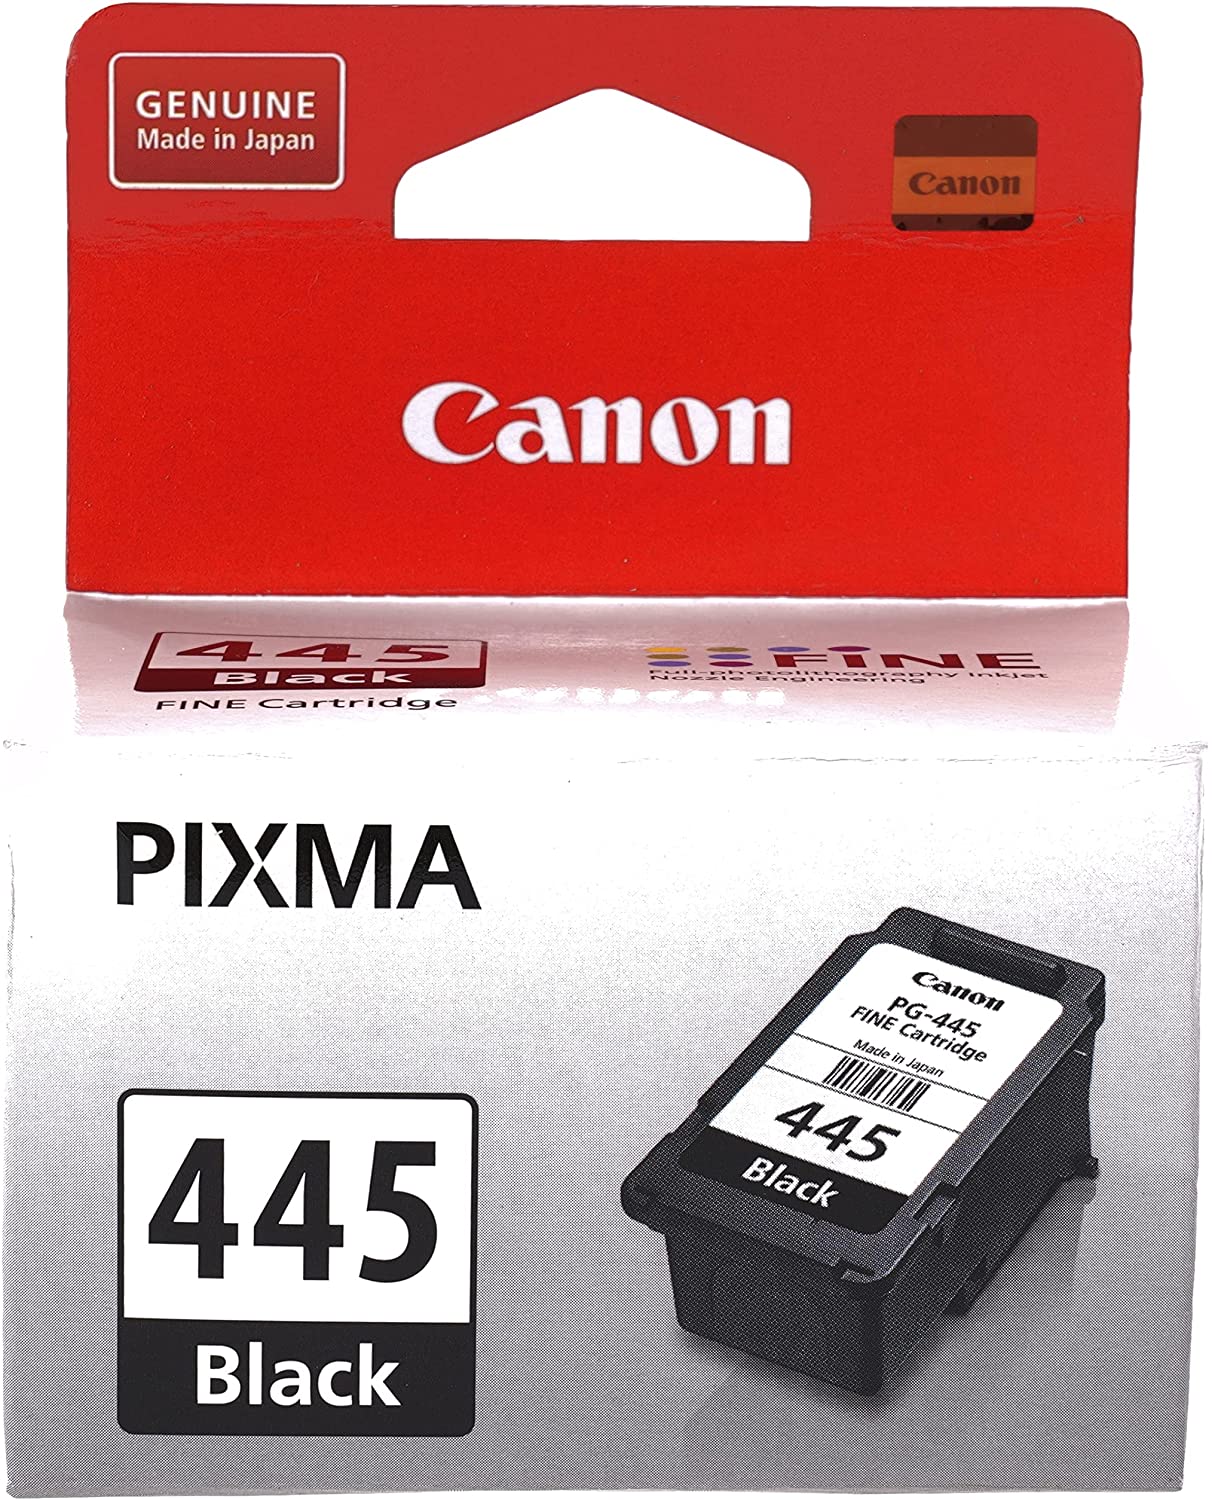 Canon Black Ink Cartridge PG-445